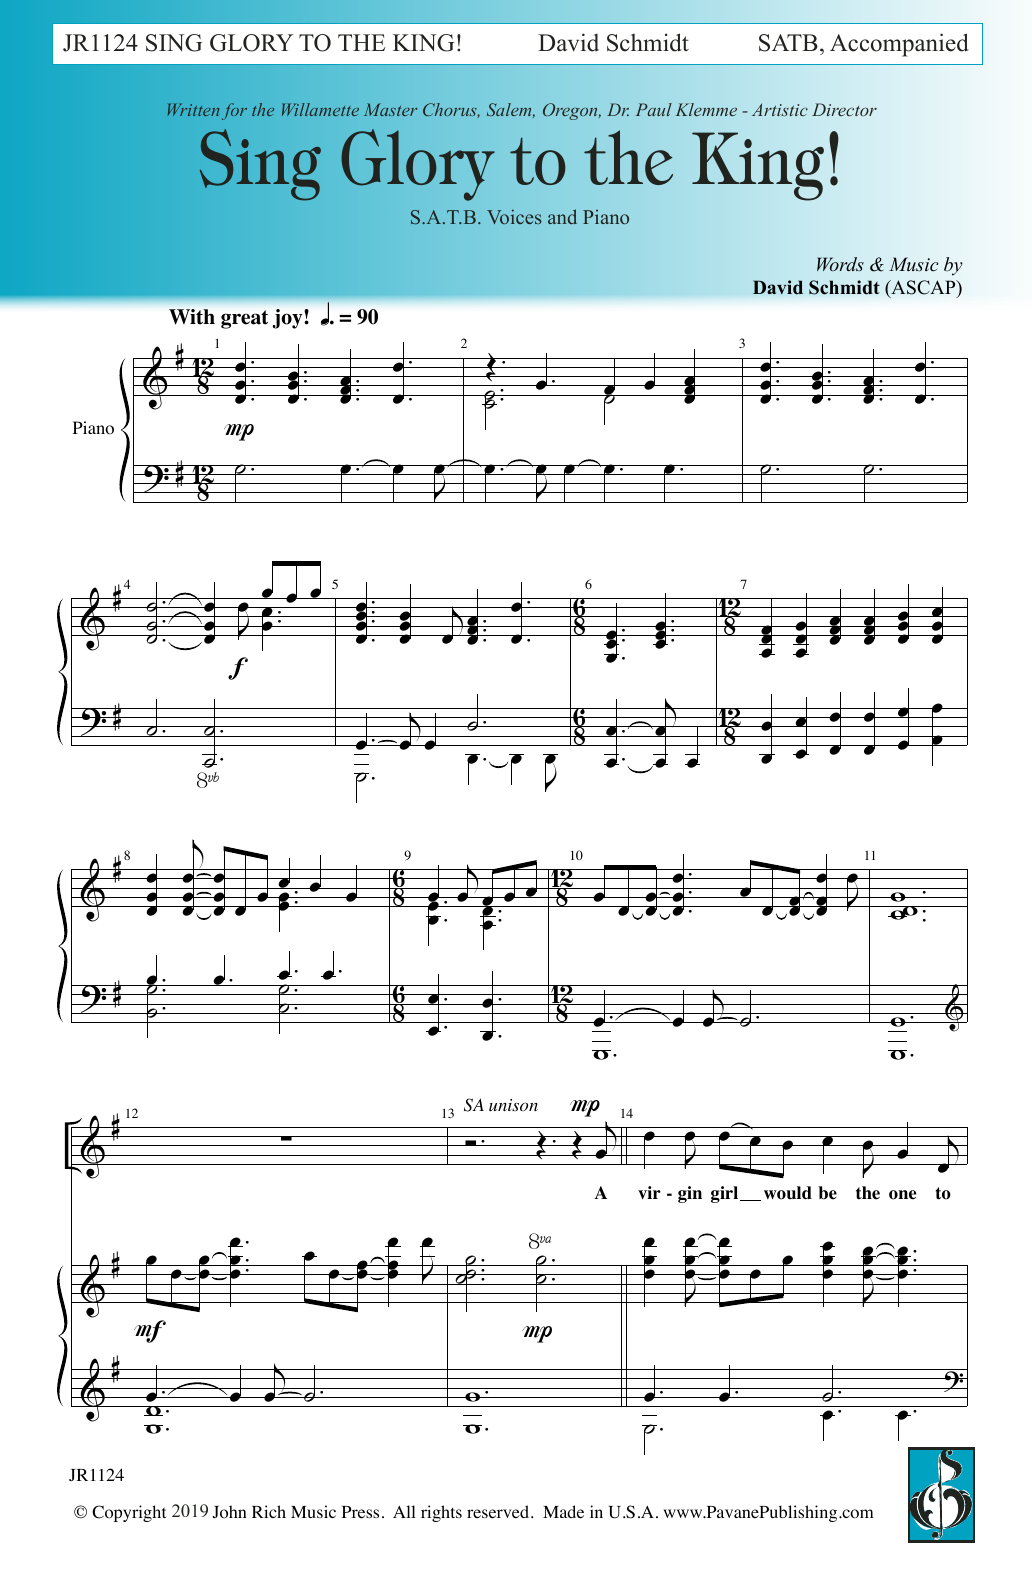 David Schmidt Sing Glory To The King Sheet Music Notes & Chords for SAB Choir - Download or Print PDF